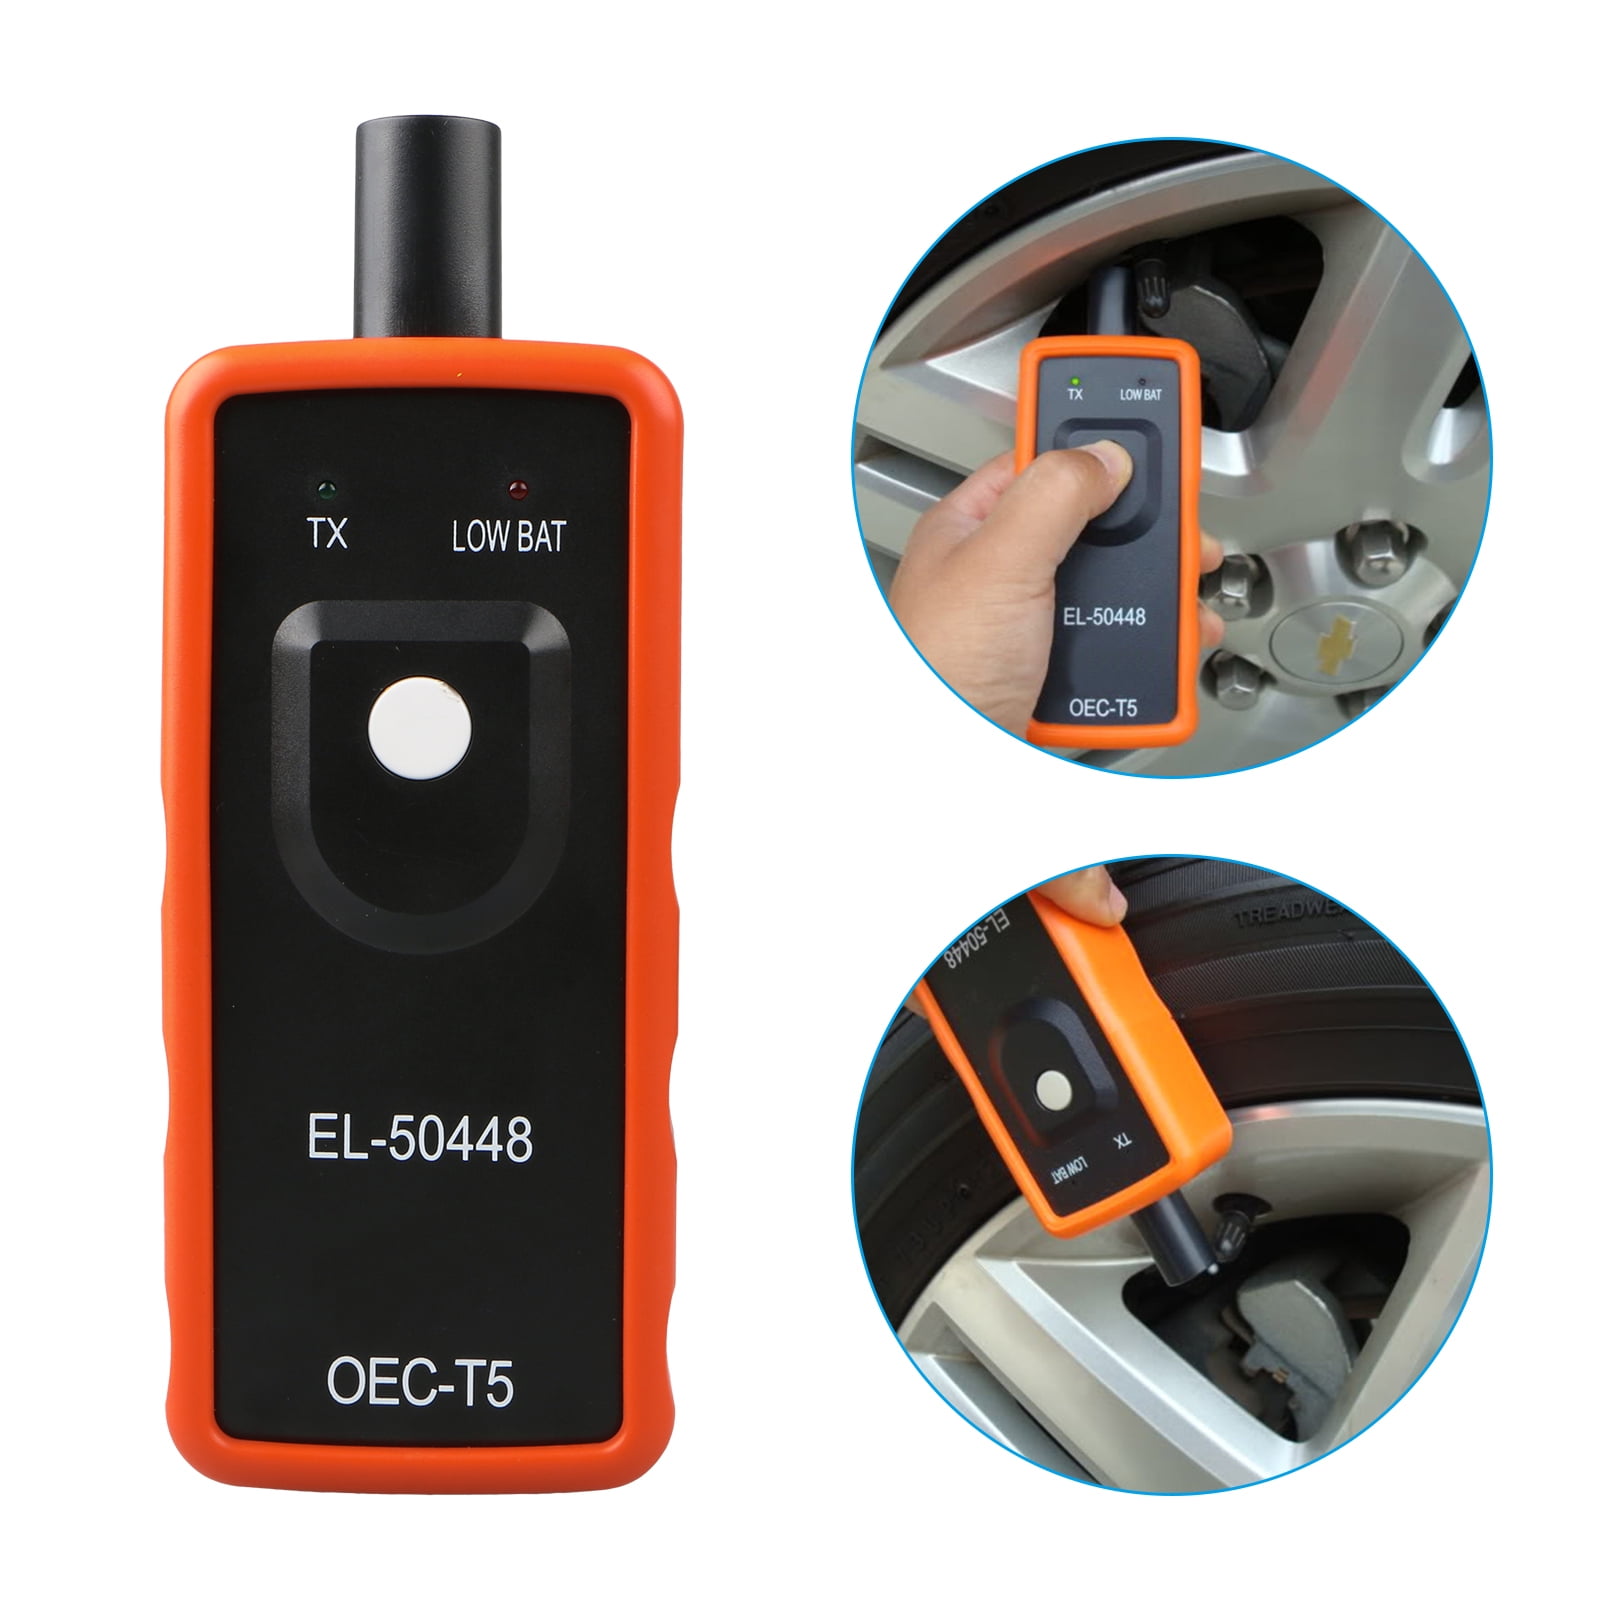 Relearn Tire Pressure EL-50448 TPMS Tool Auto Monitor Sensor Reset For GM Cars